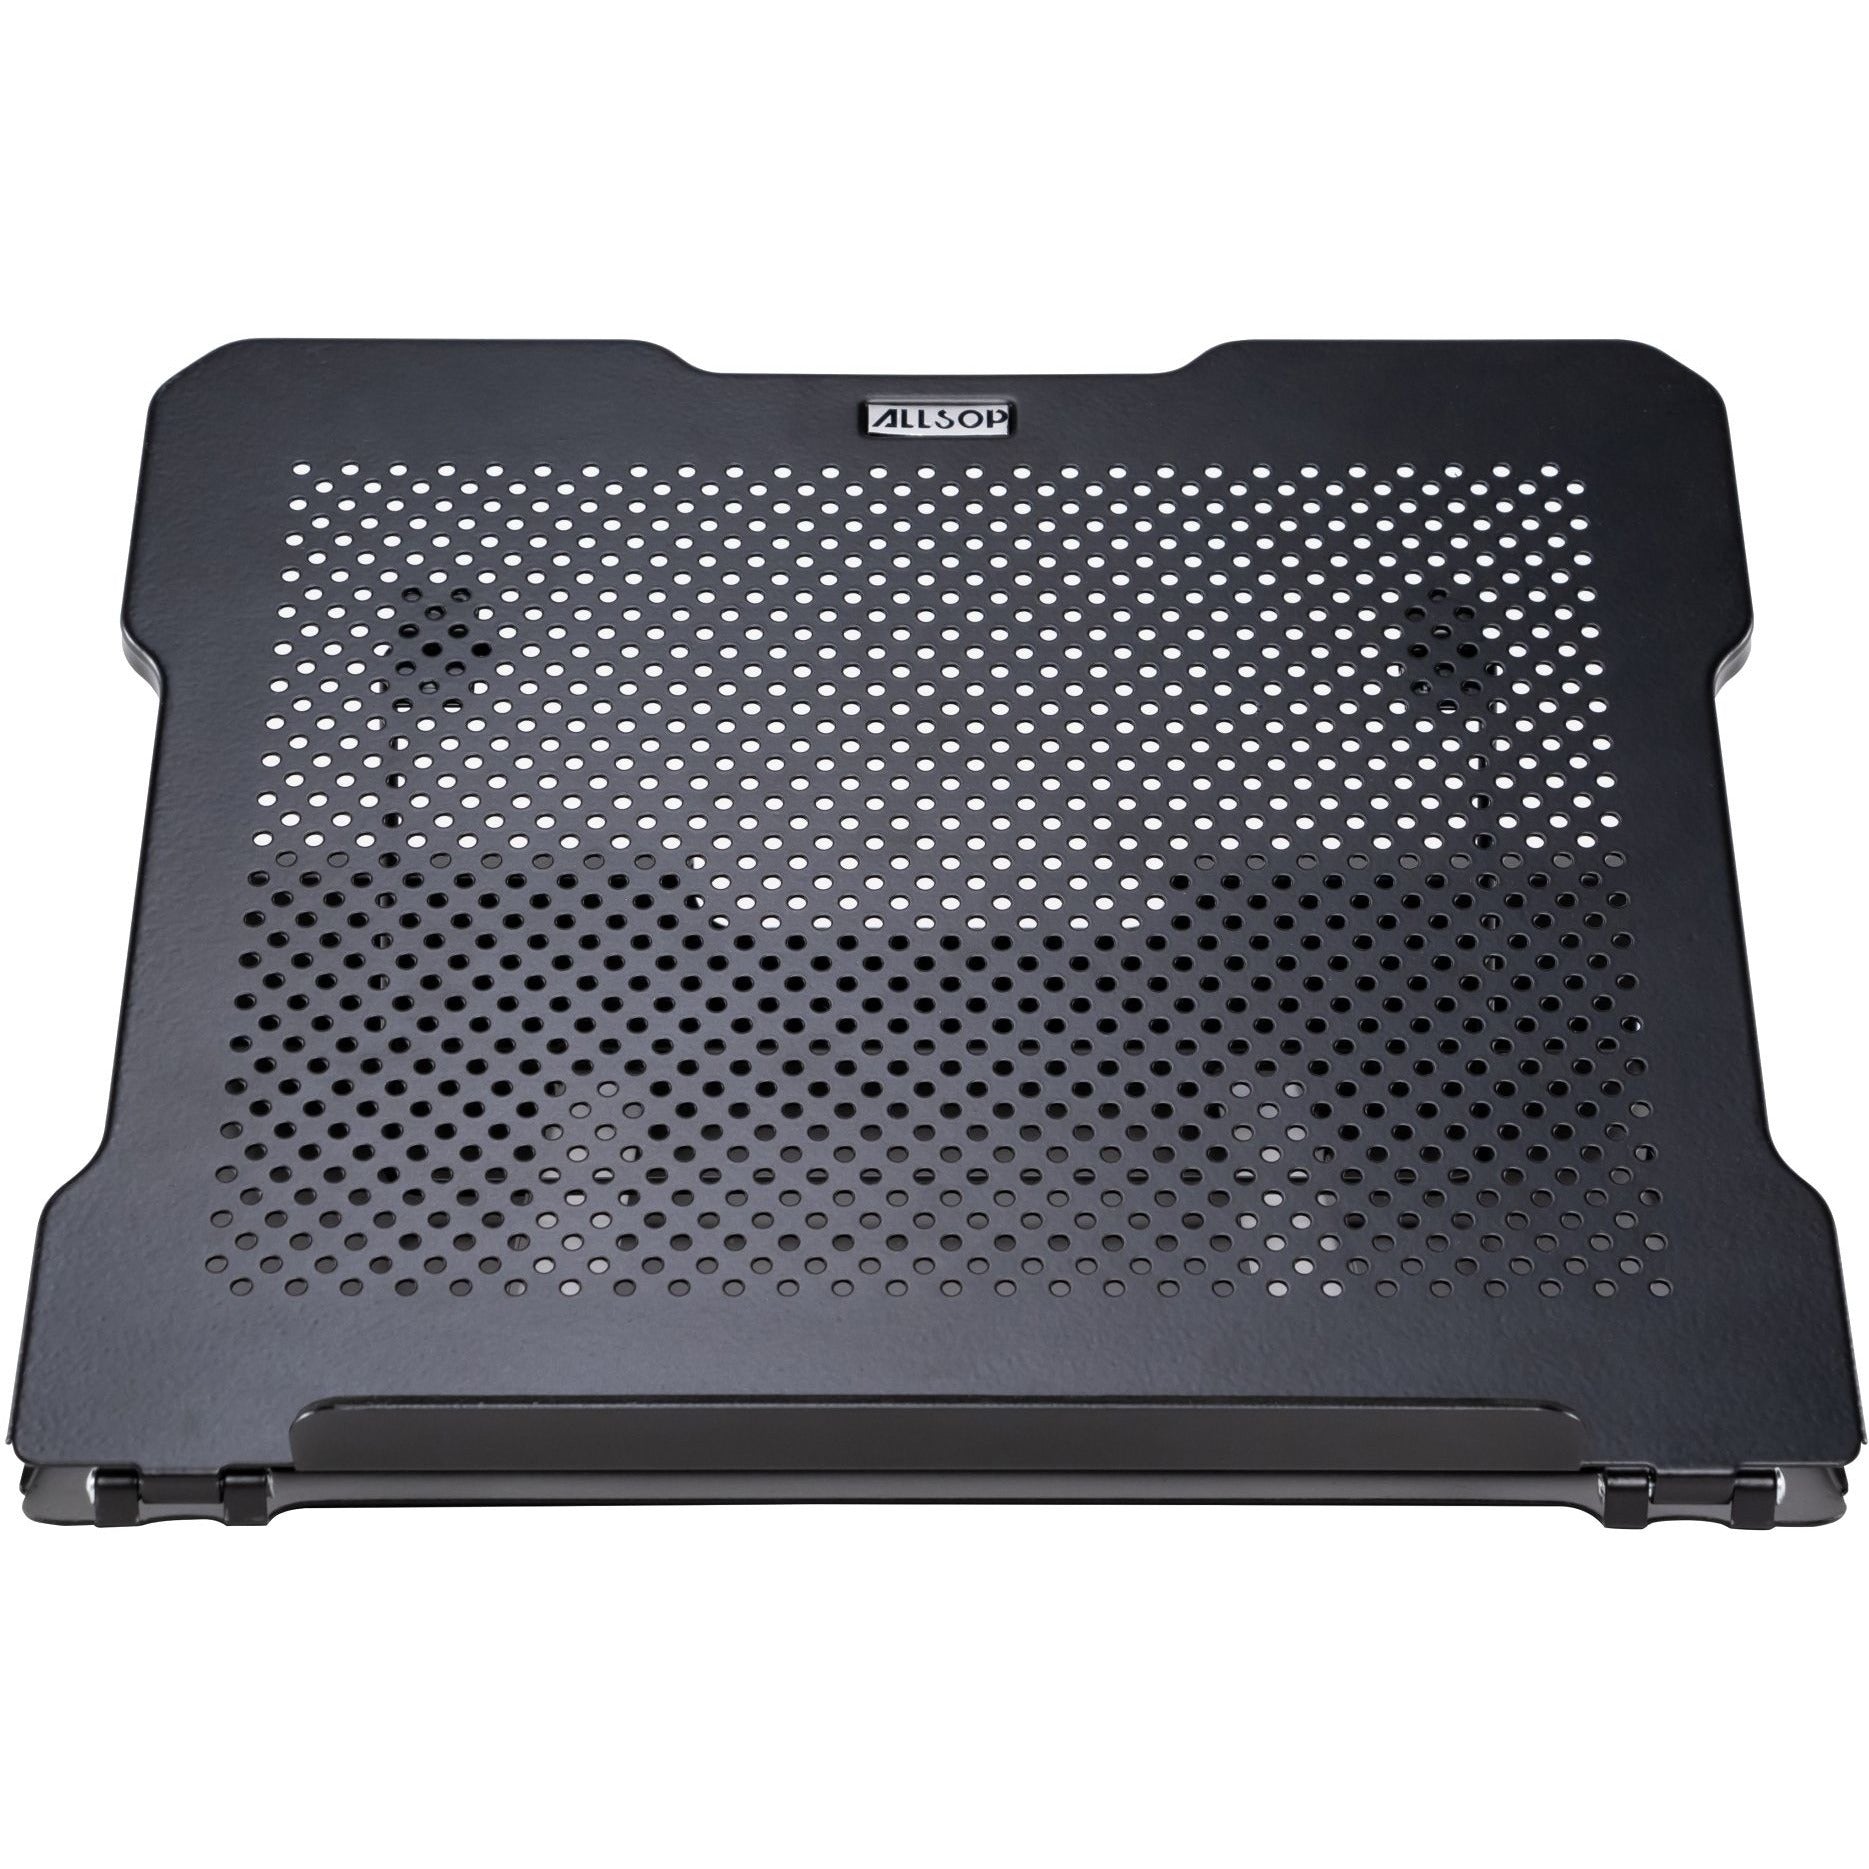 allsop-metal-art-adjustable-laptop-stand-with-7-positions-32147-23-height-x-13-width-x-11-depth-metal-black-pearl_asp32147 - 2